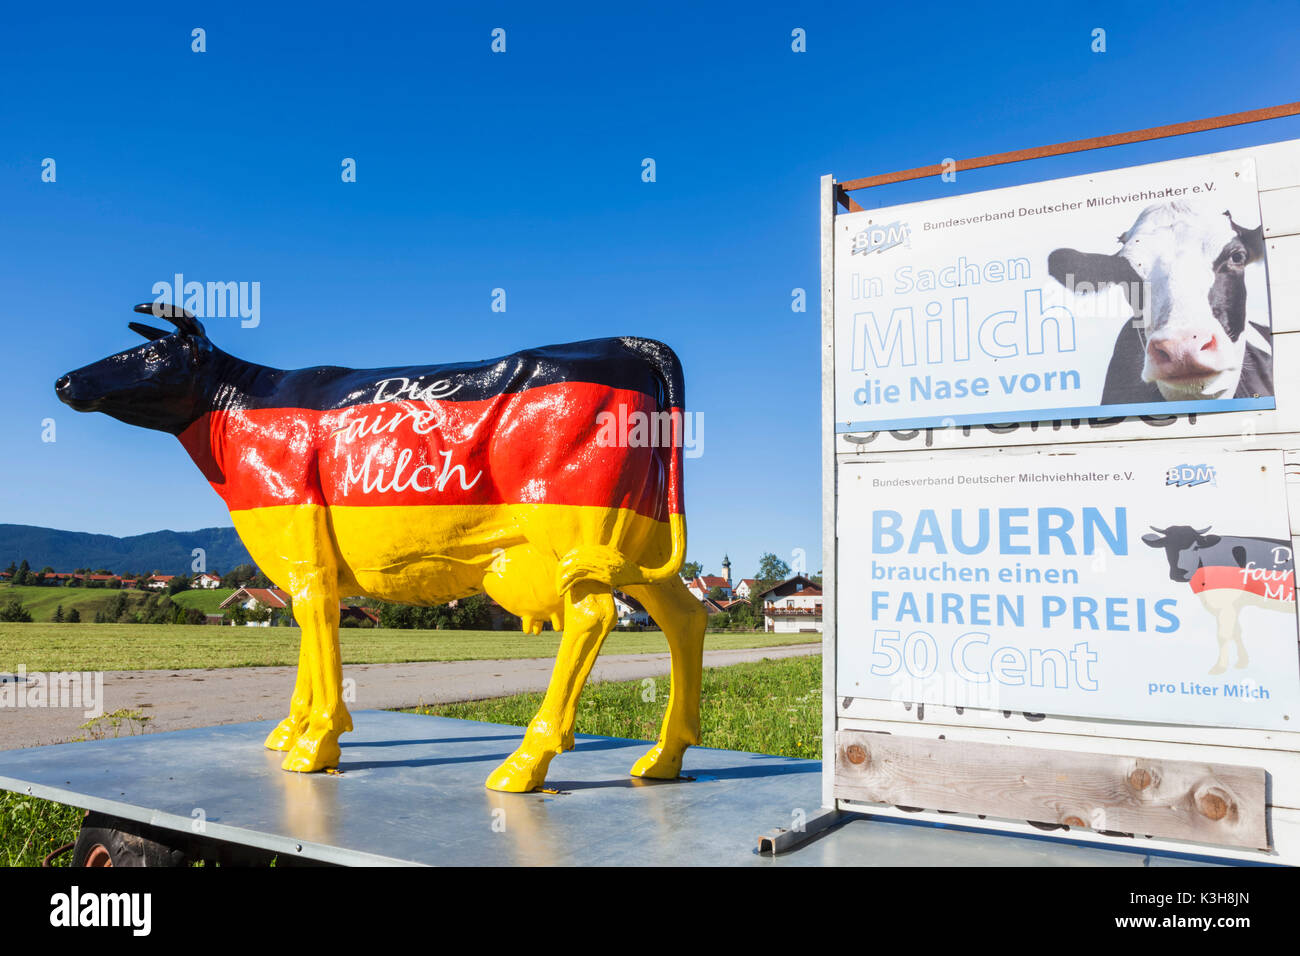 Germany, Bavaria, Farmer's Information Board Demanding Fair Price for Milk Stock Photo